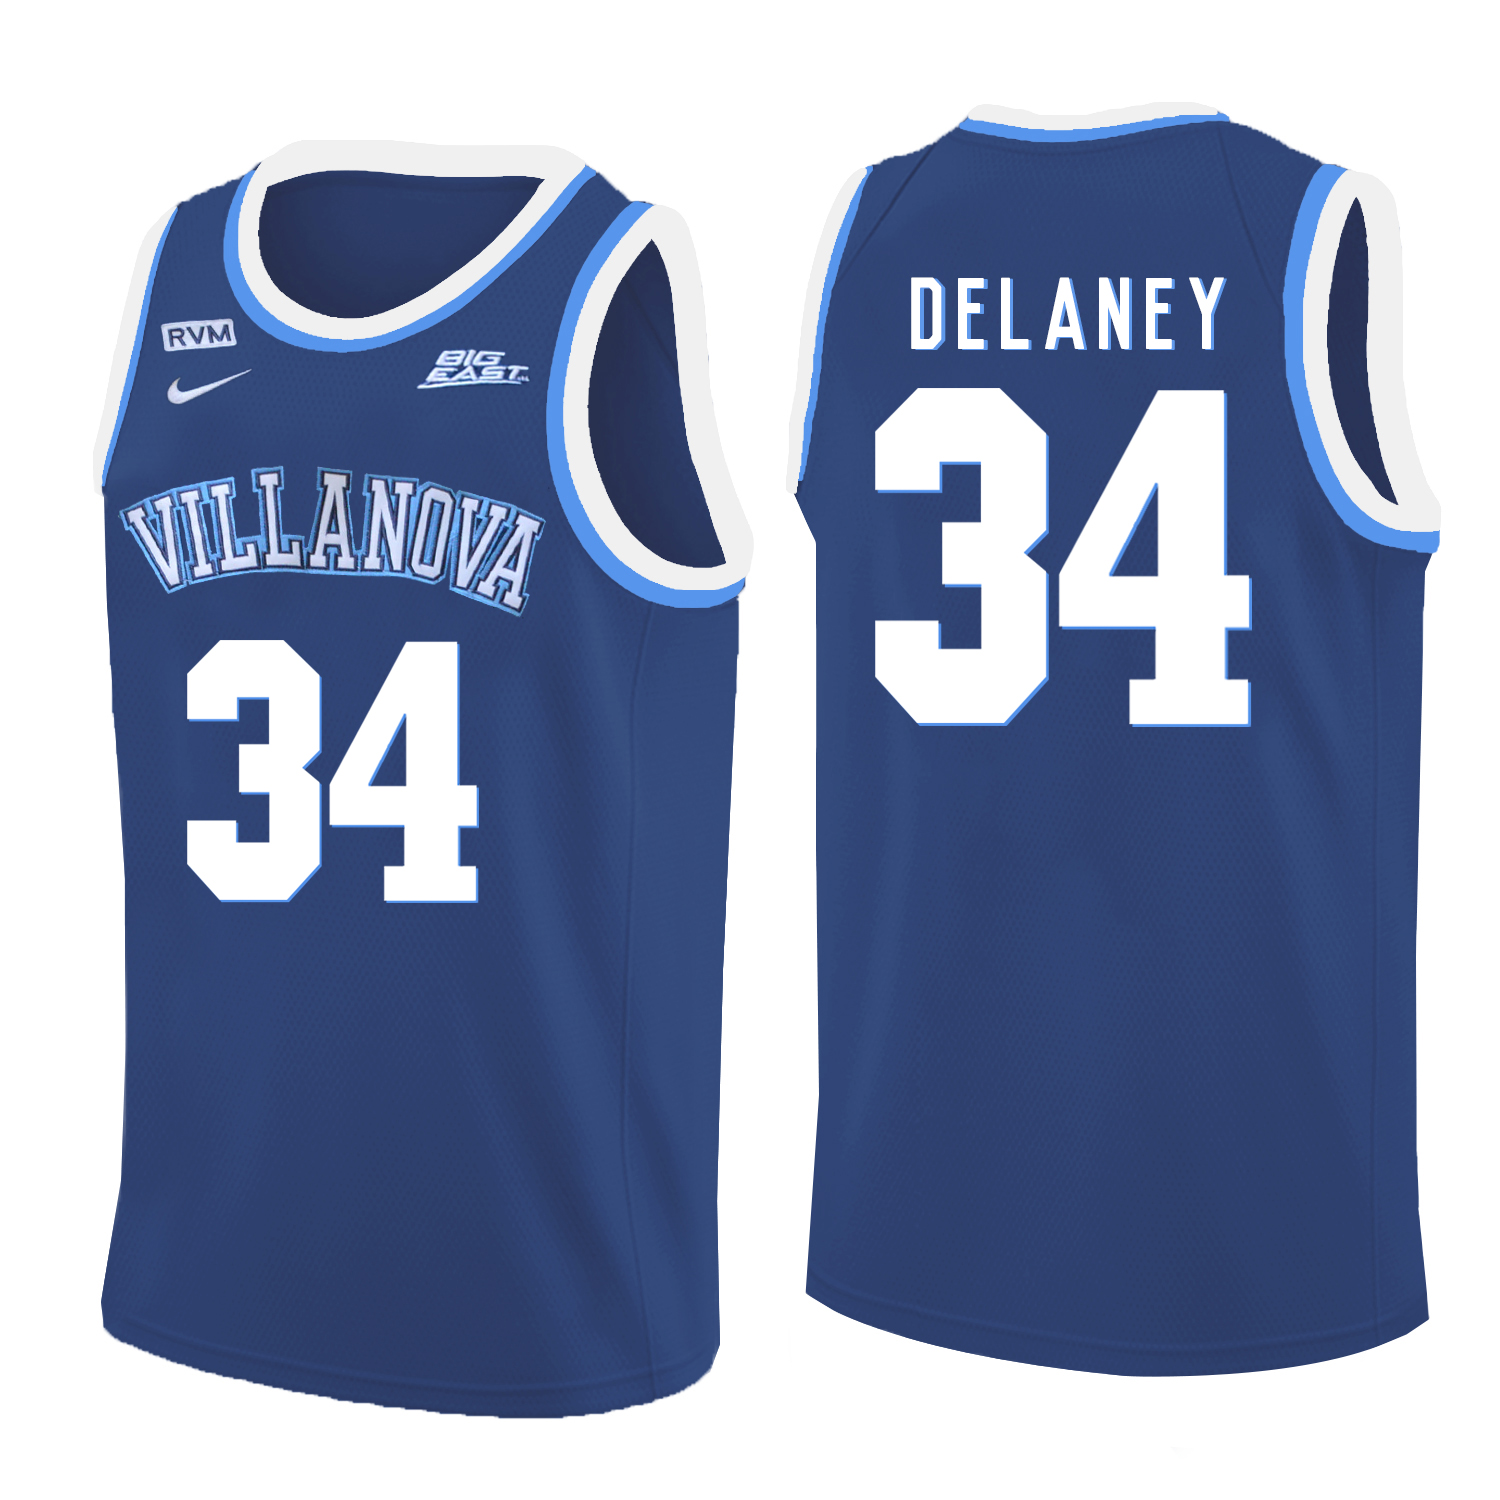 Villanova Wildcats 34 Tim Delaney Blue College Basketball Jersey